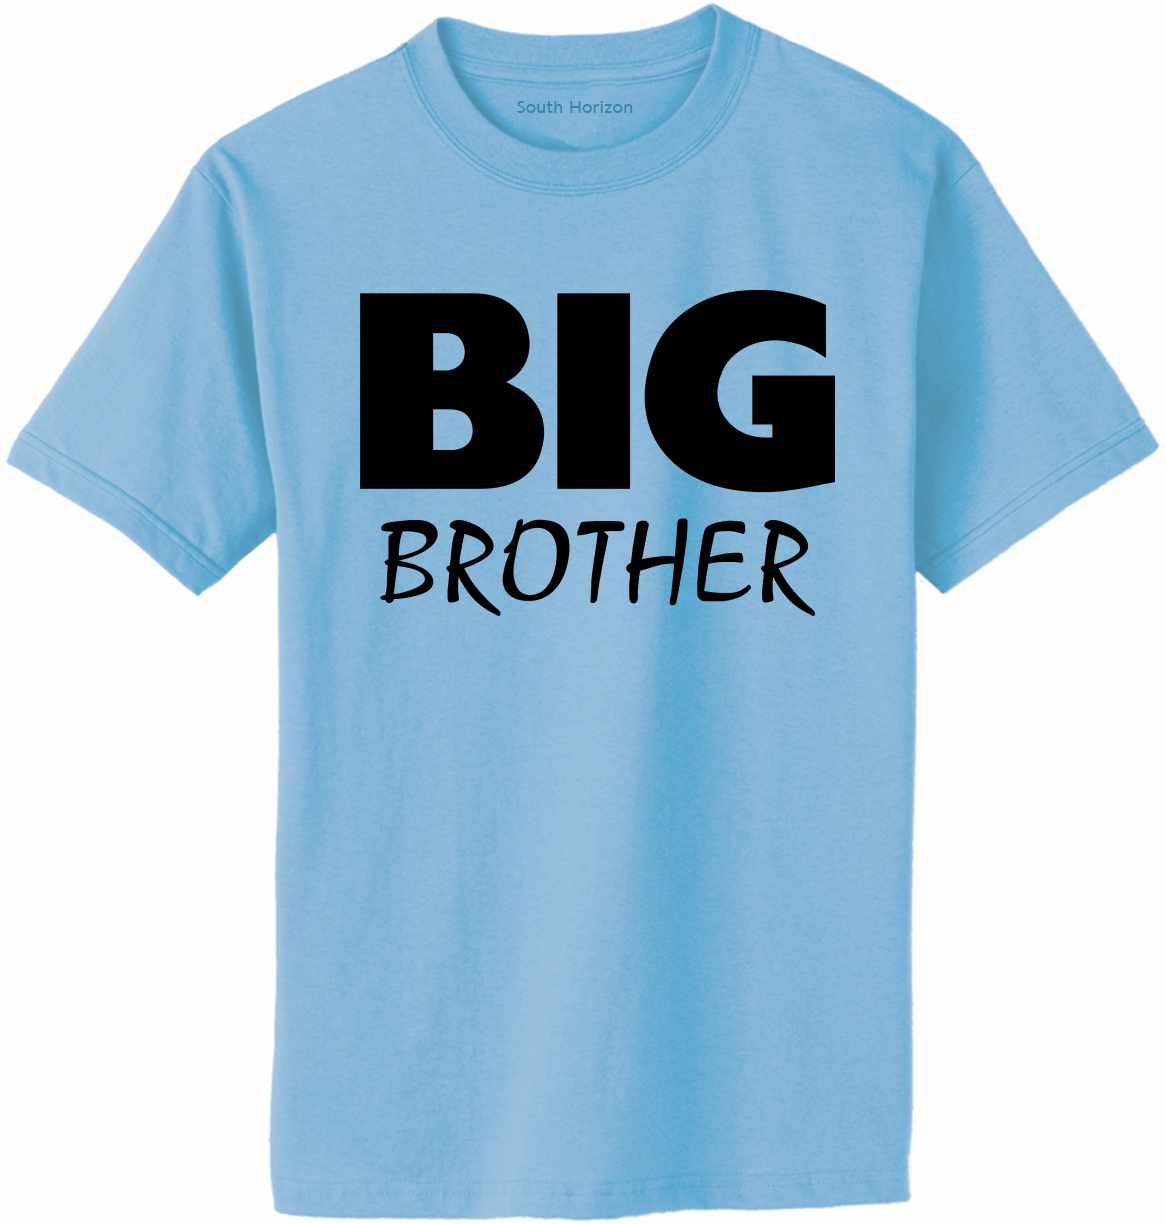 Big Brother Adult T-Shirt (#953-1)